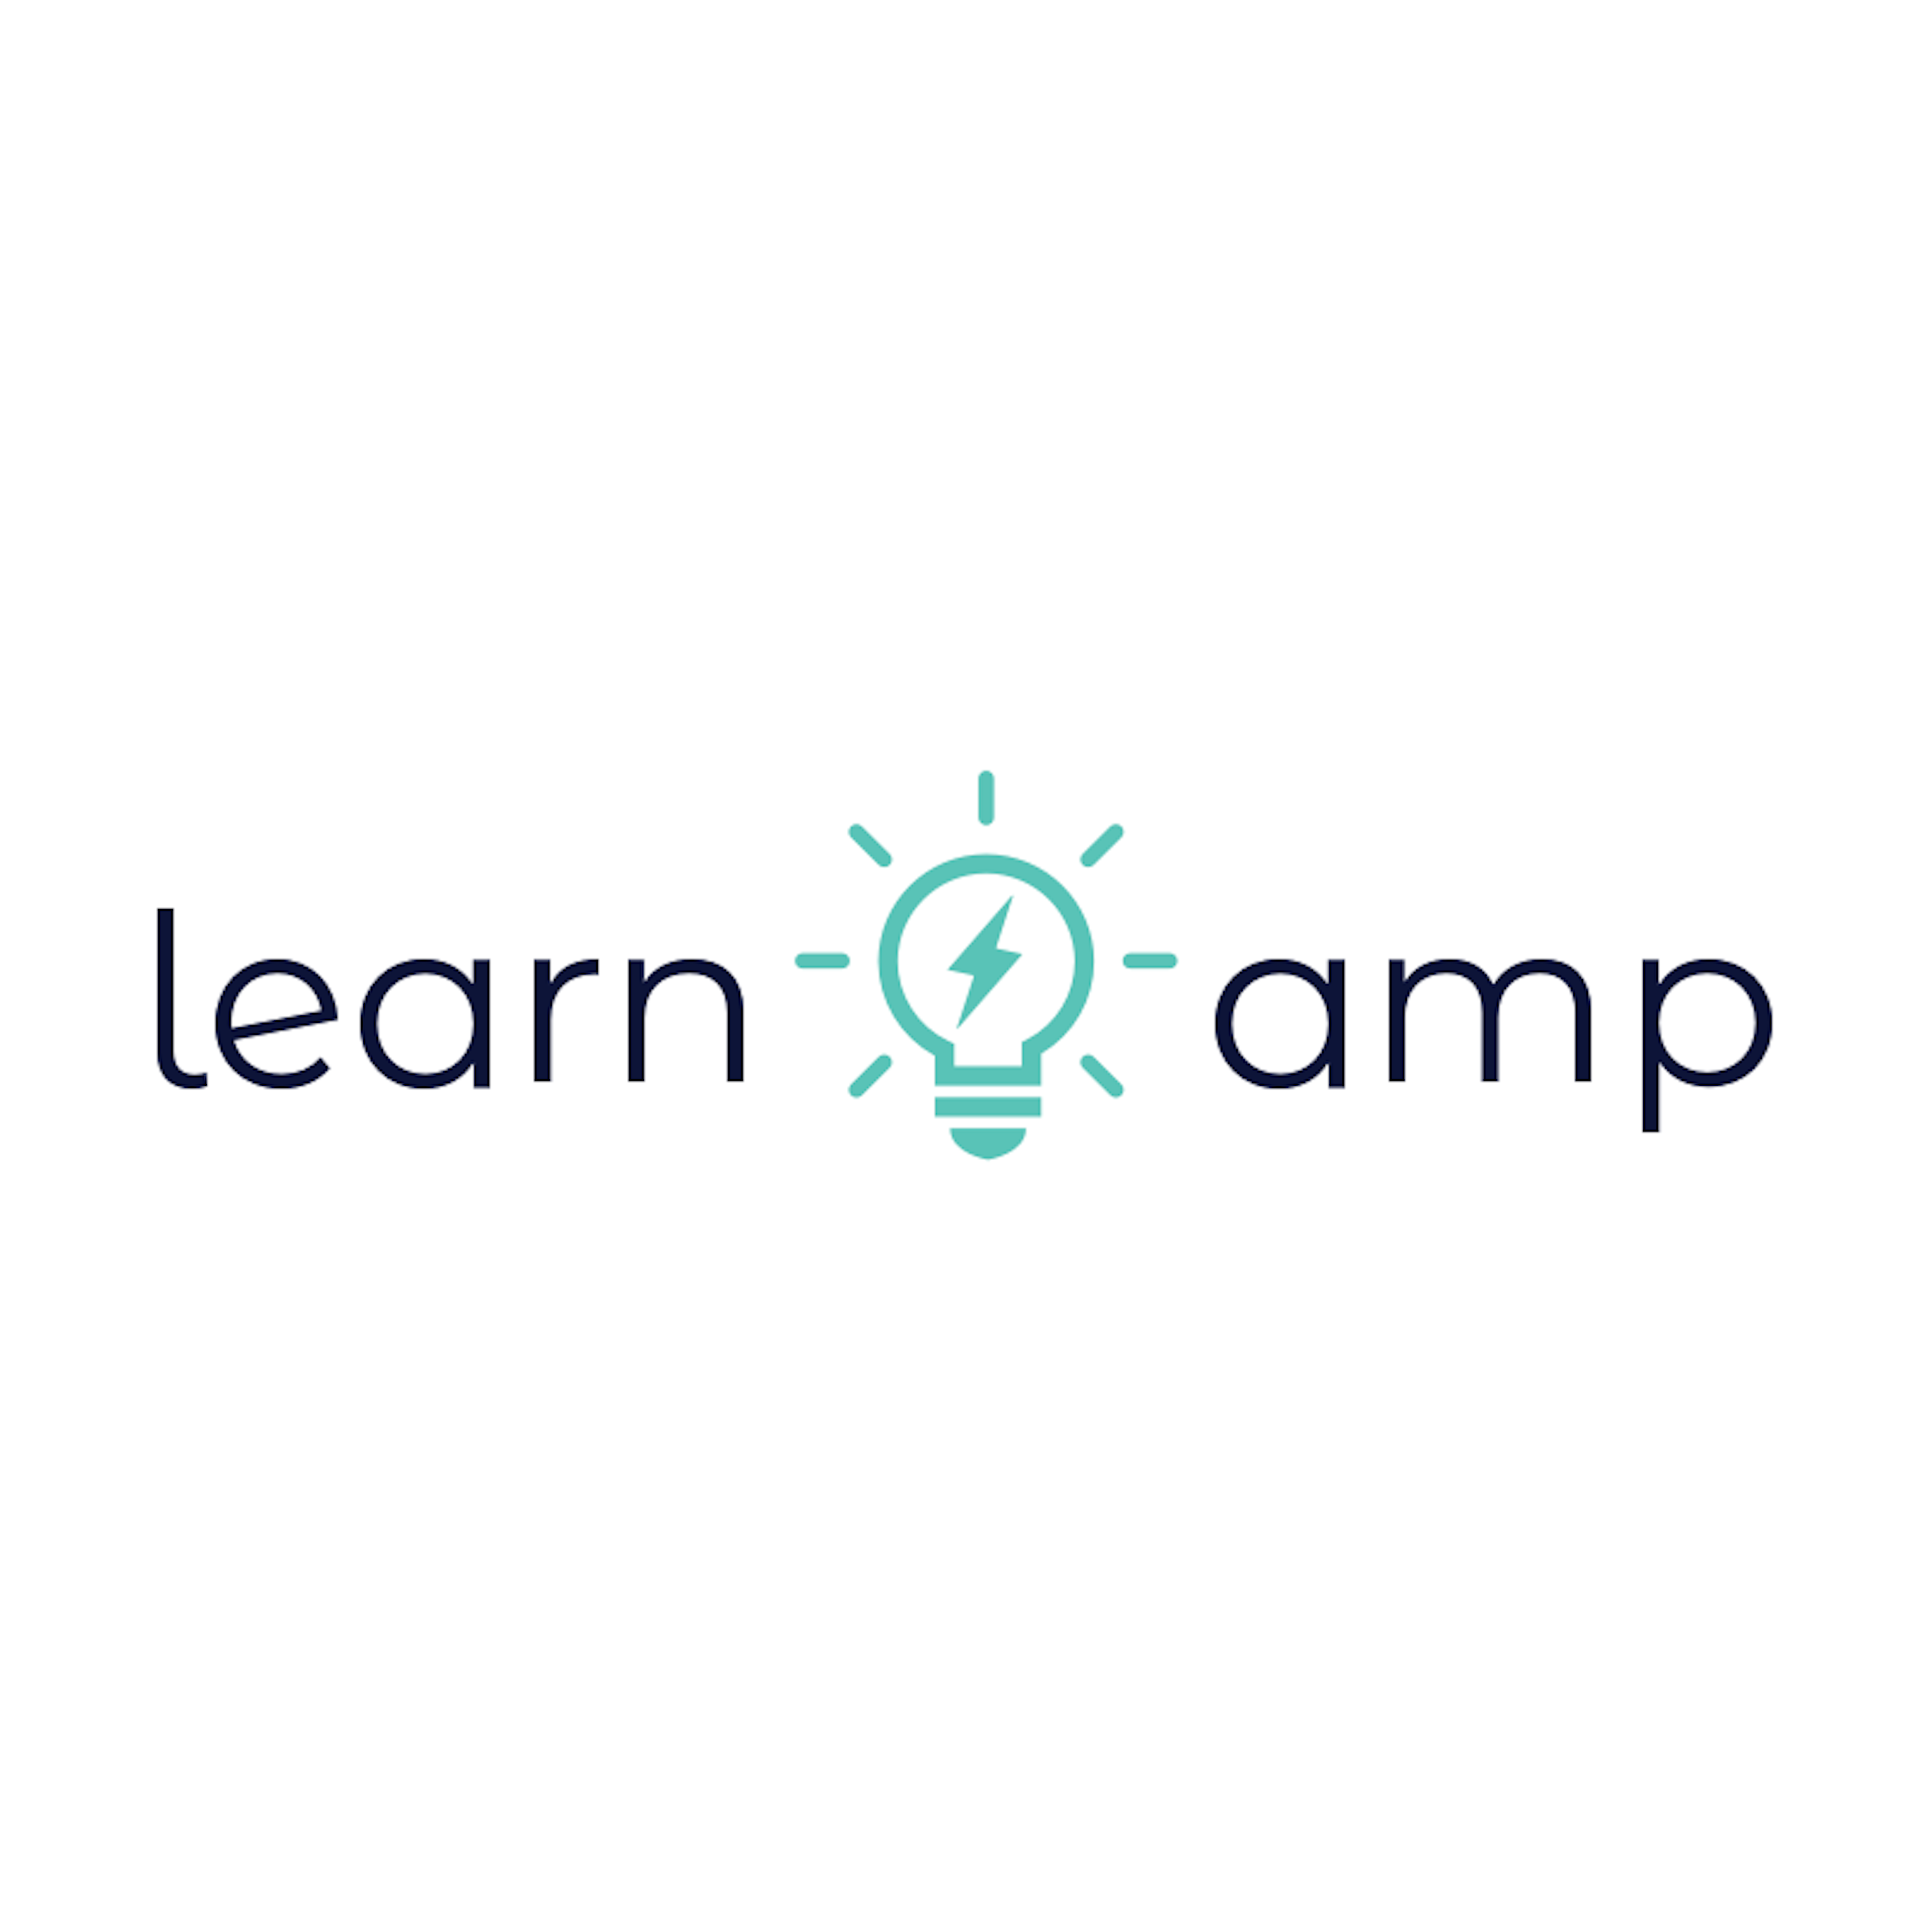 Learn Amp Logo